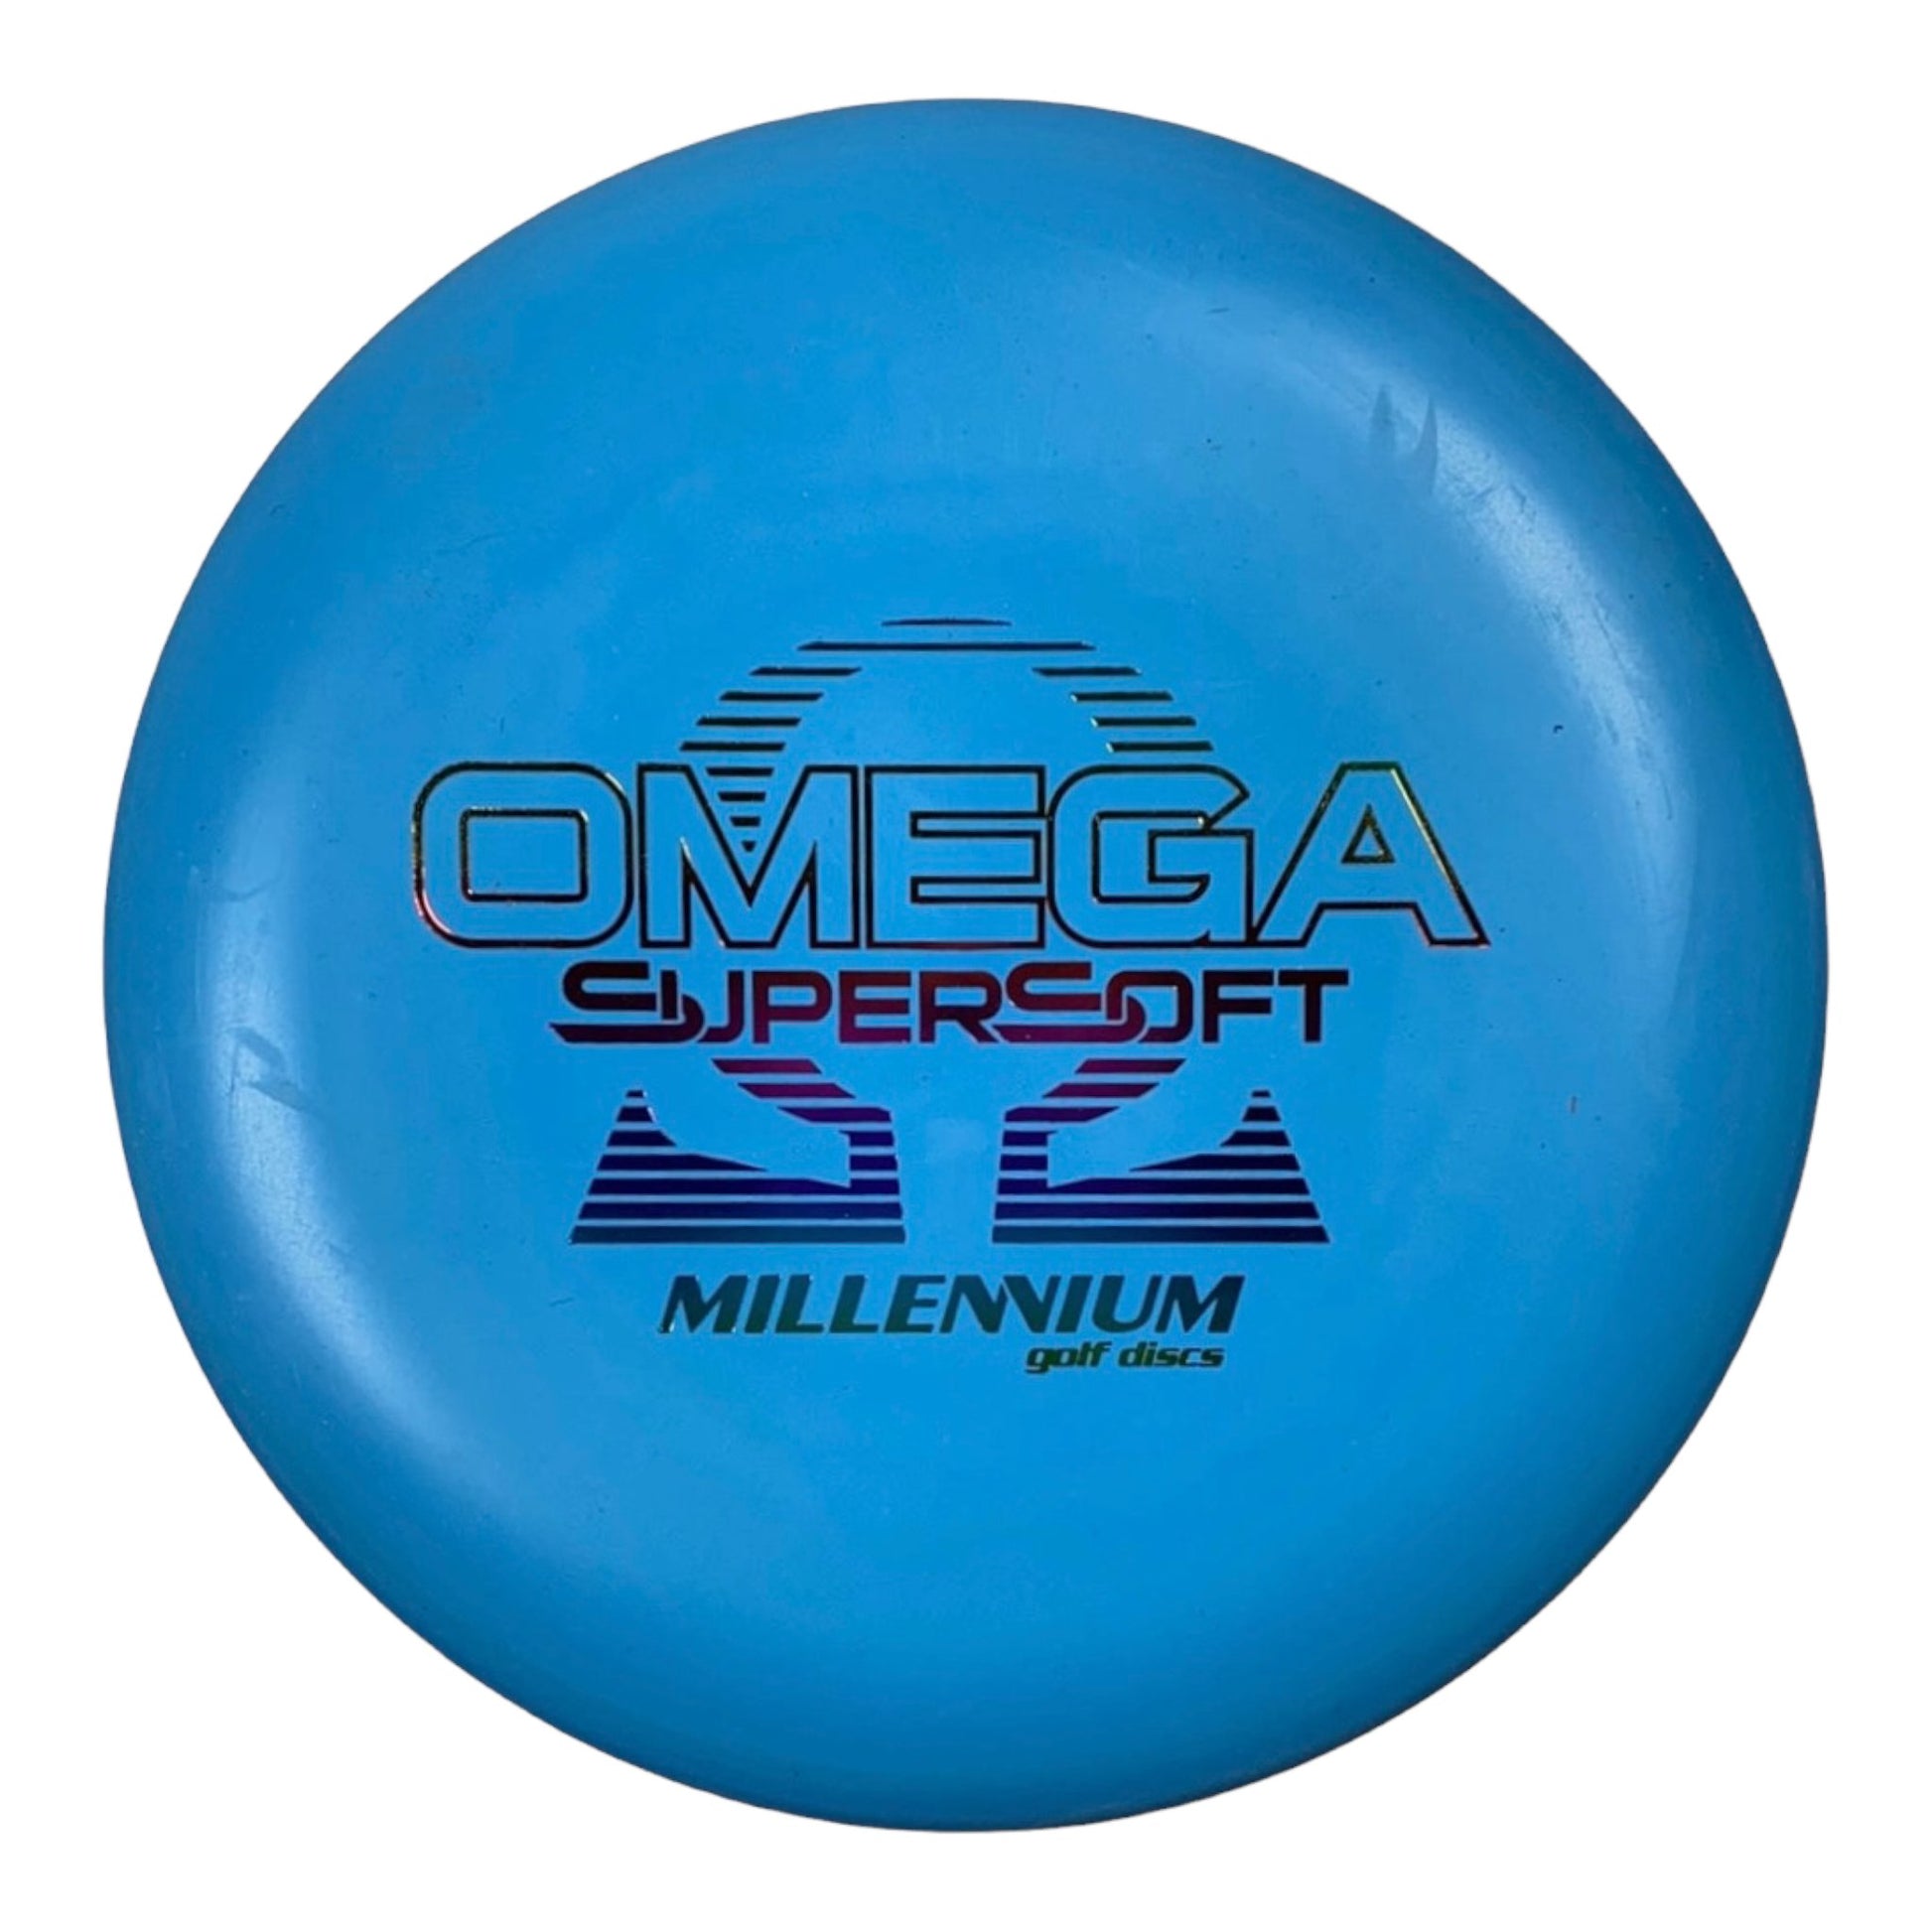 Millennium Golf Discs Omega | Supersoft | Blue/Rainbow 172-175g Disc Golf